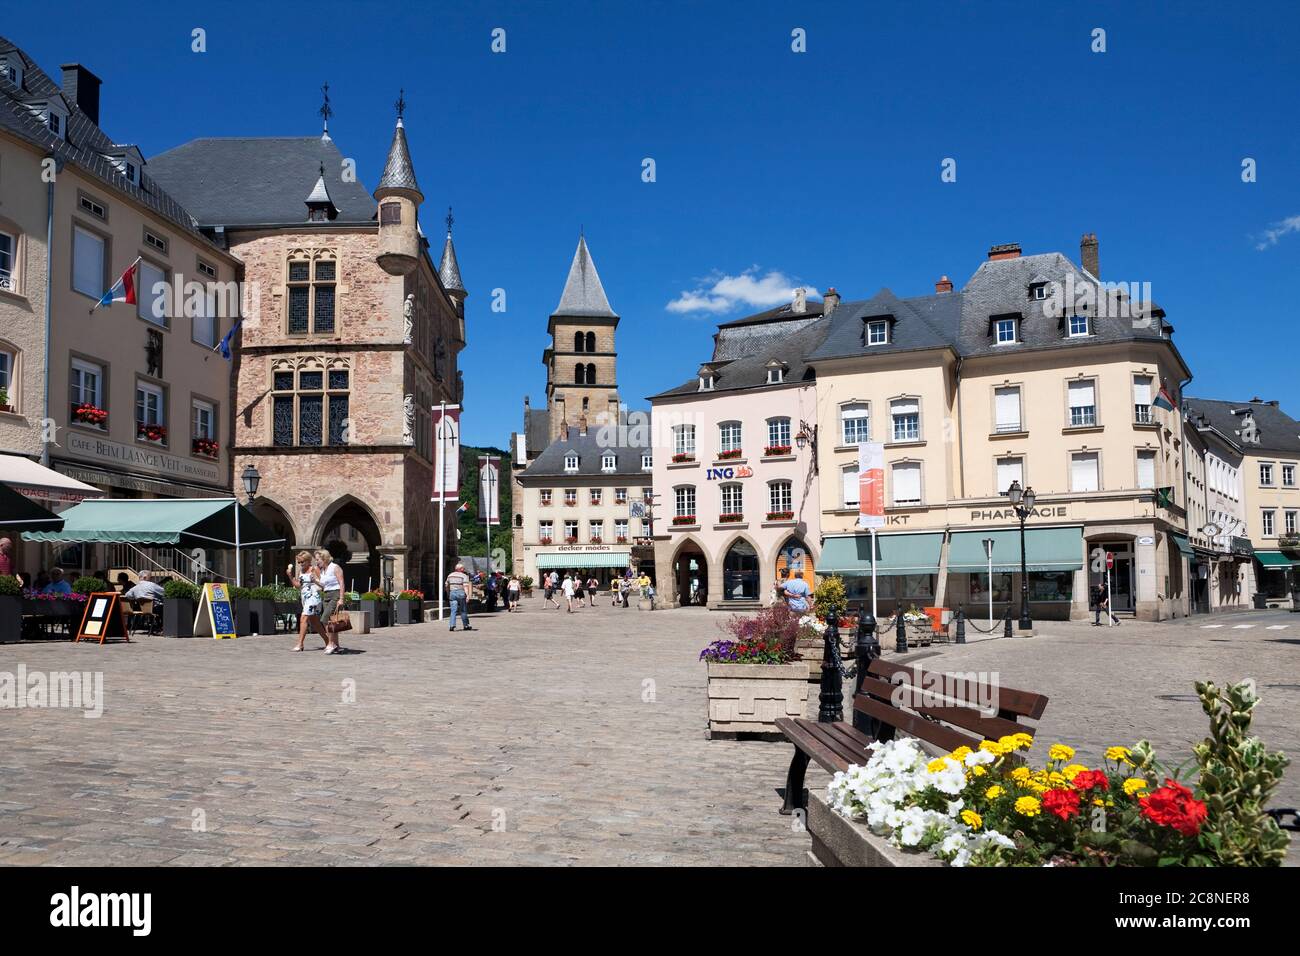 Market Square, Echternach, Luxembourg, Europe Stock Photo